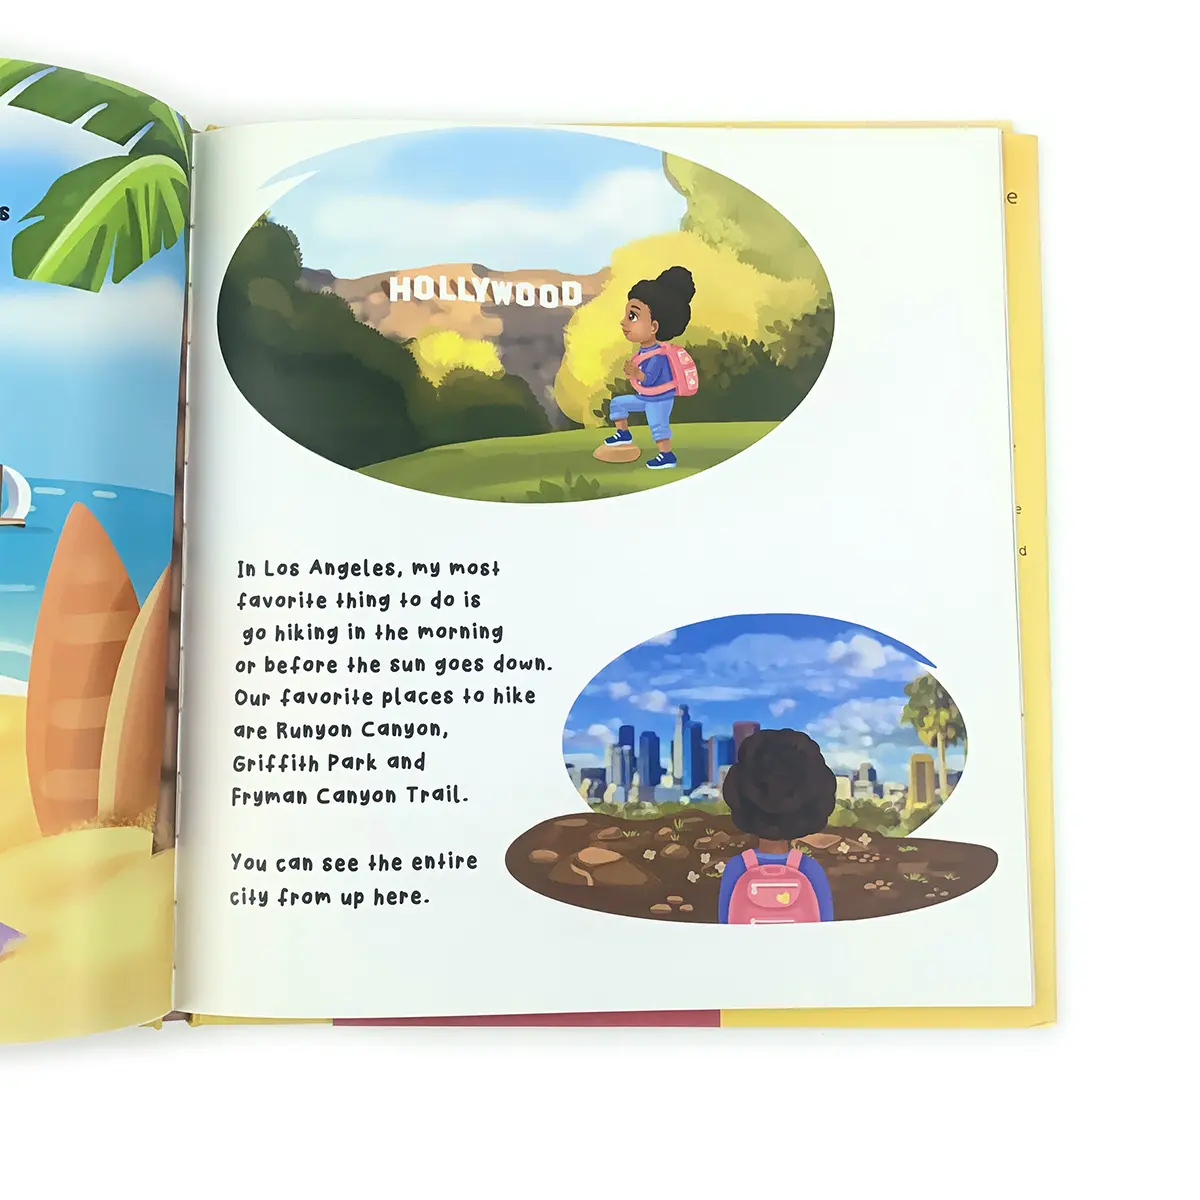 Libros Infantiles Personalizados, servicios de impresión editorial, tablero para colorear, tapa dura reciclable, impresión de libros infantiles